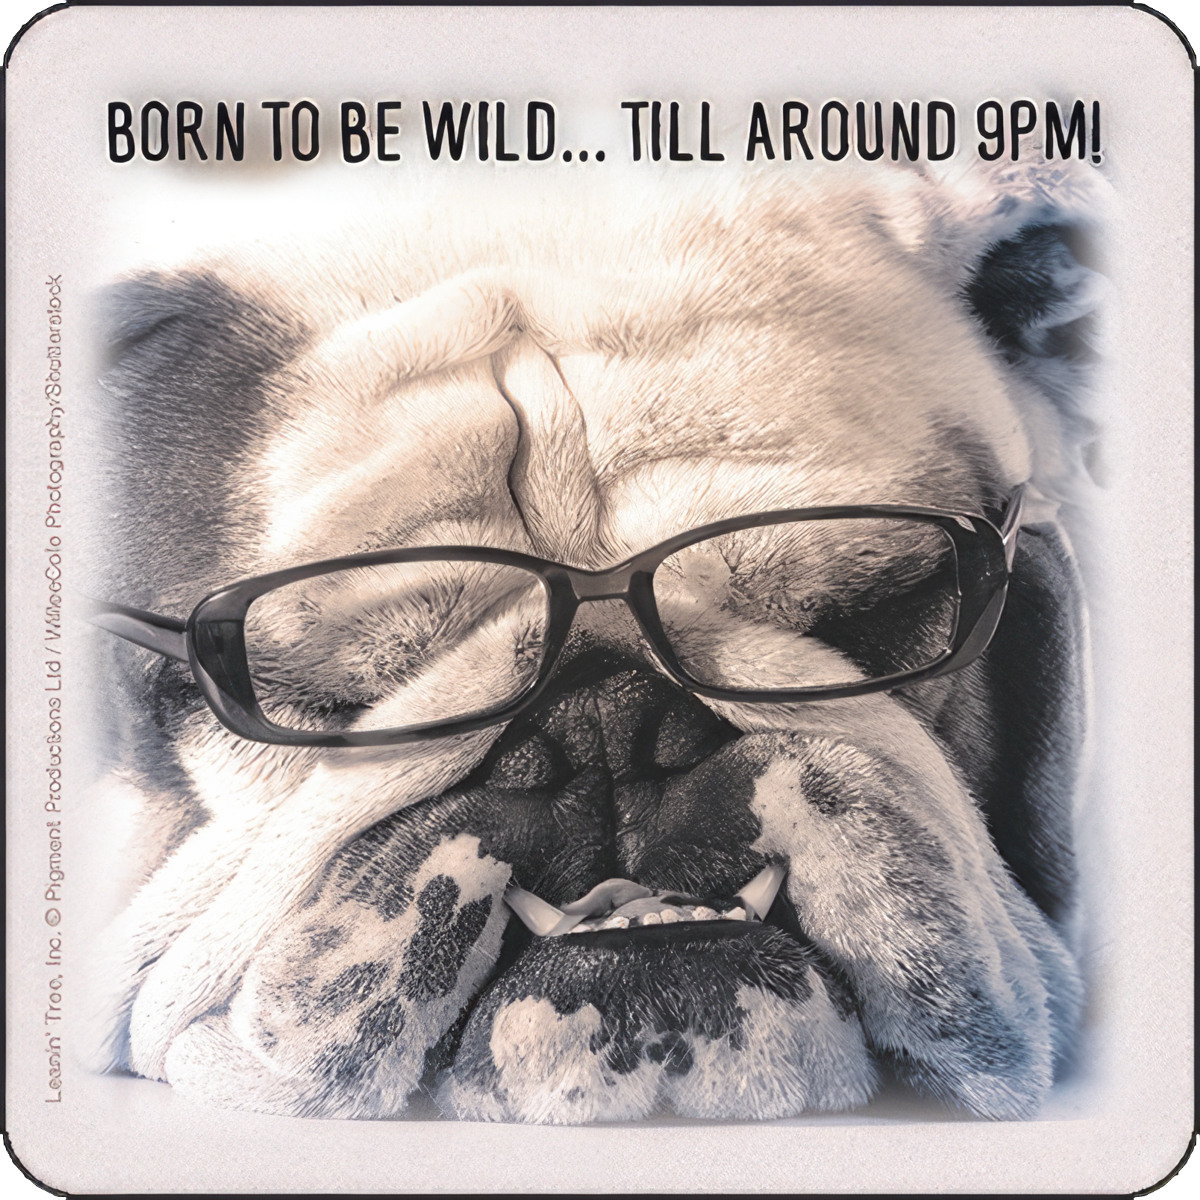 Born to Be Wild... Till Around 9pm!